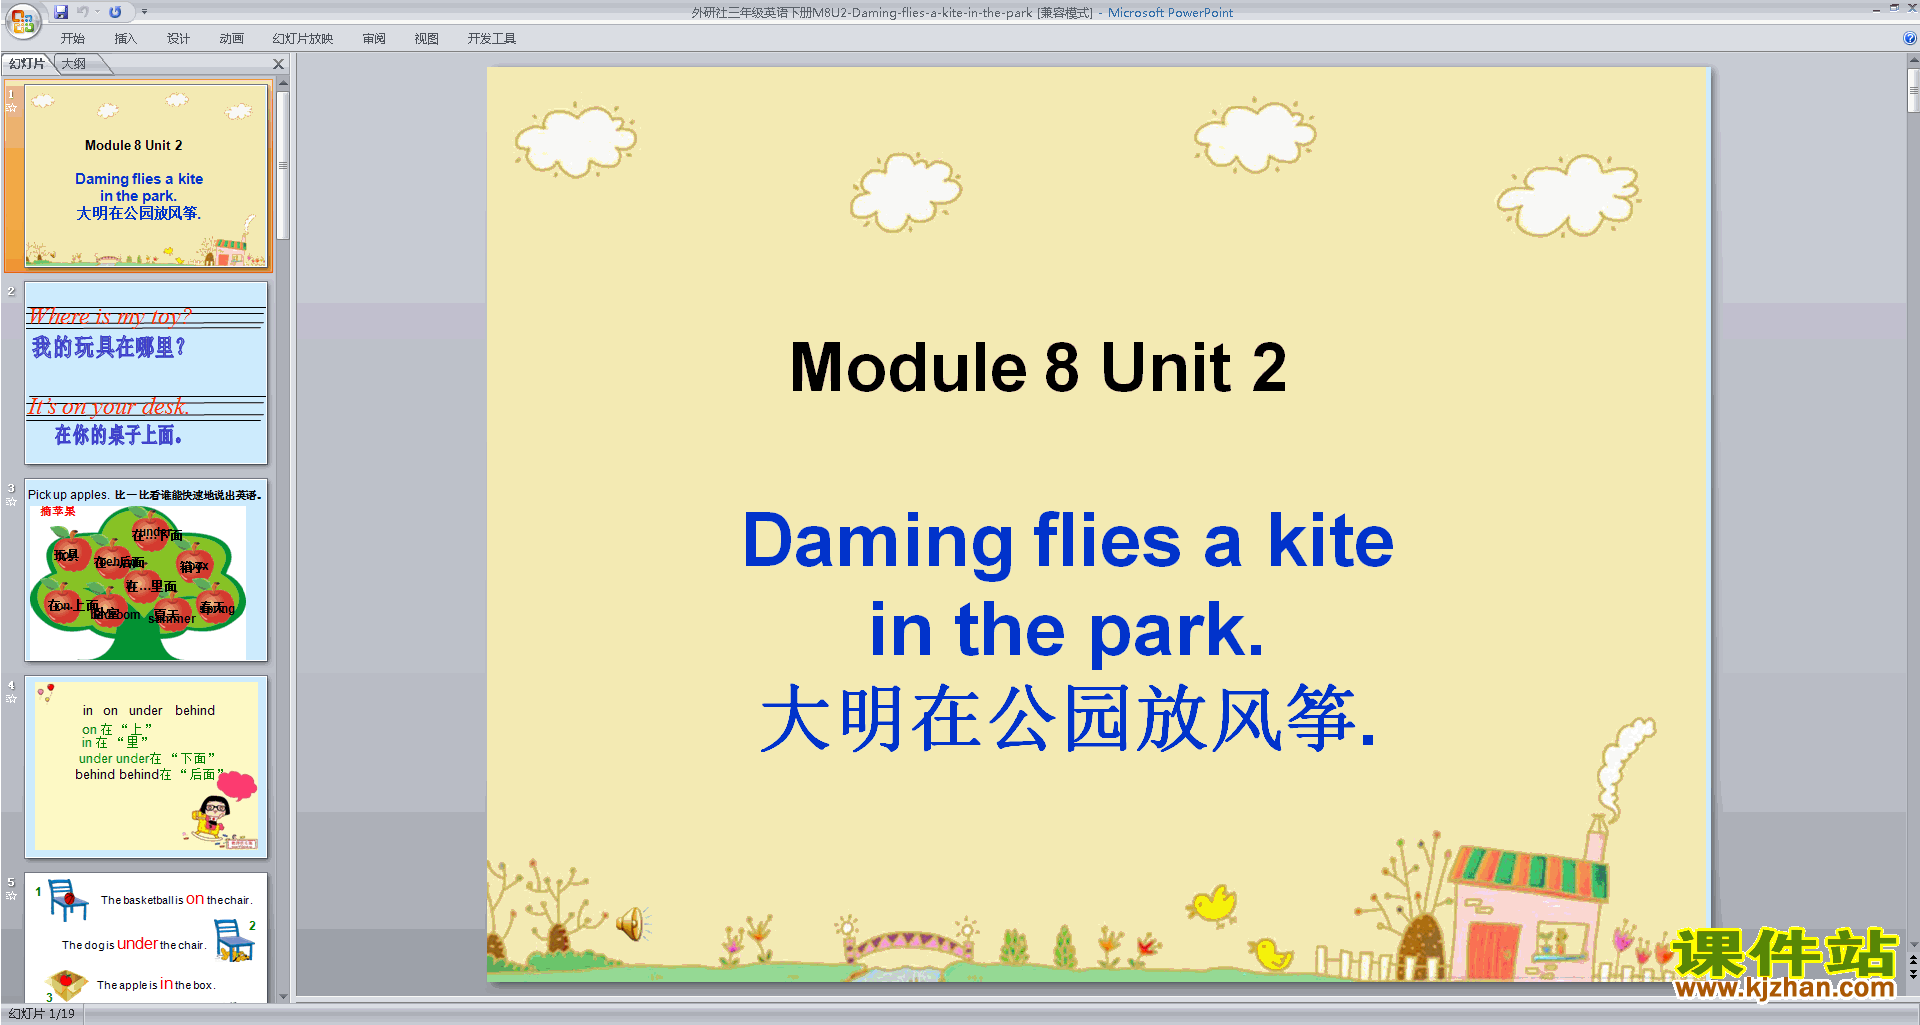 Module8 Unit2 Daming flies a kite in the parkμppt